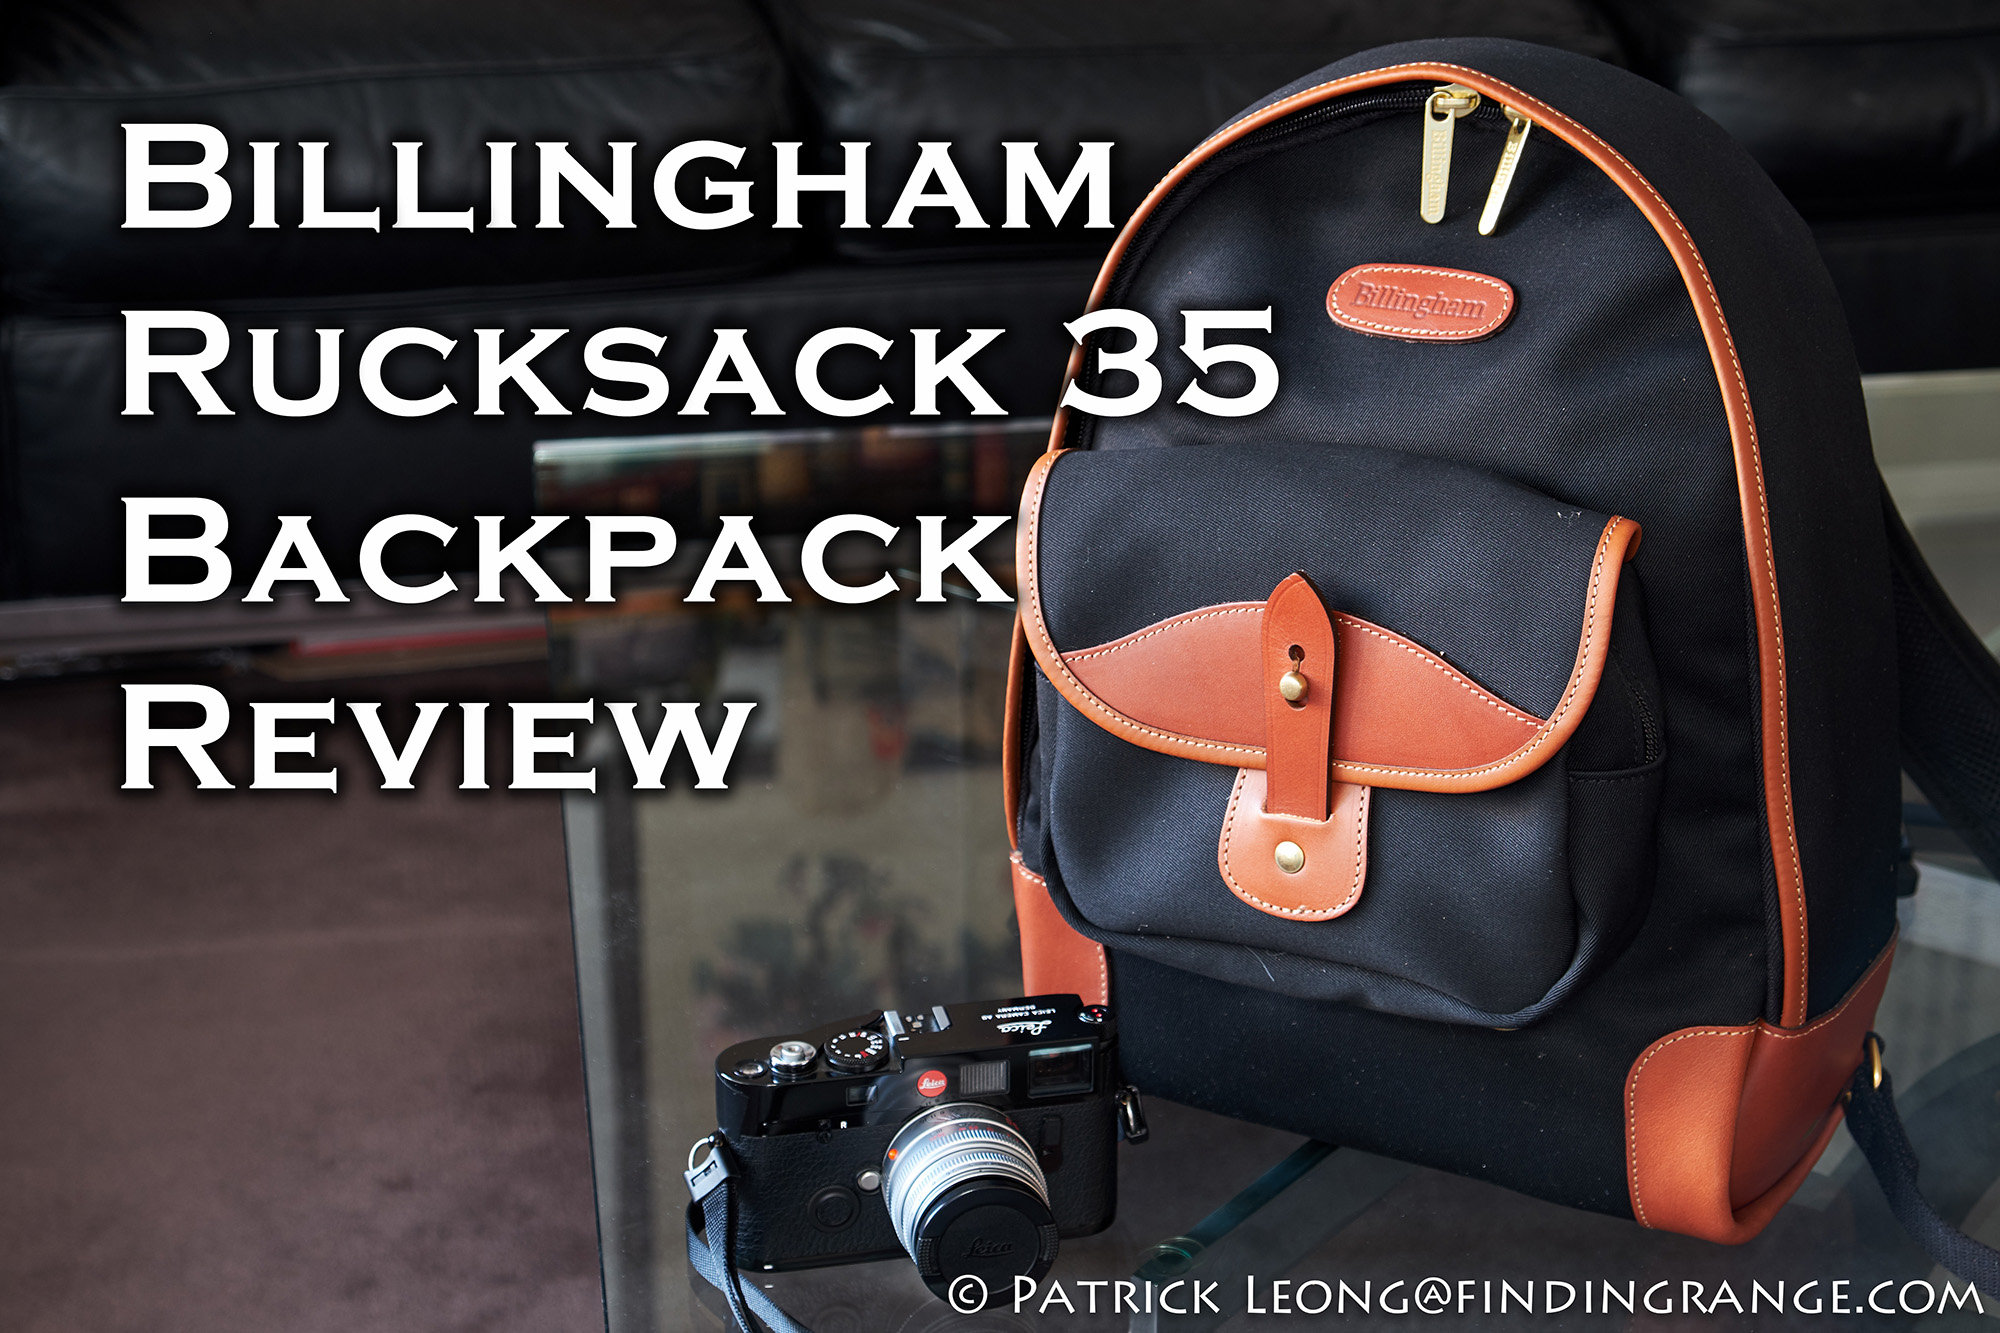 Billingham Rucksack 35 Backpack Review